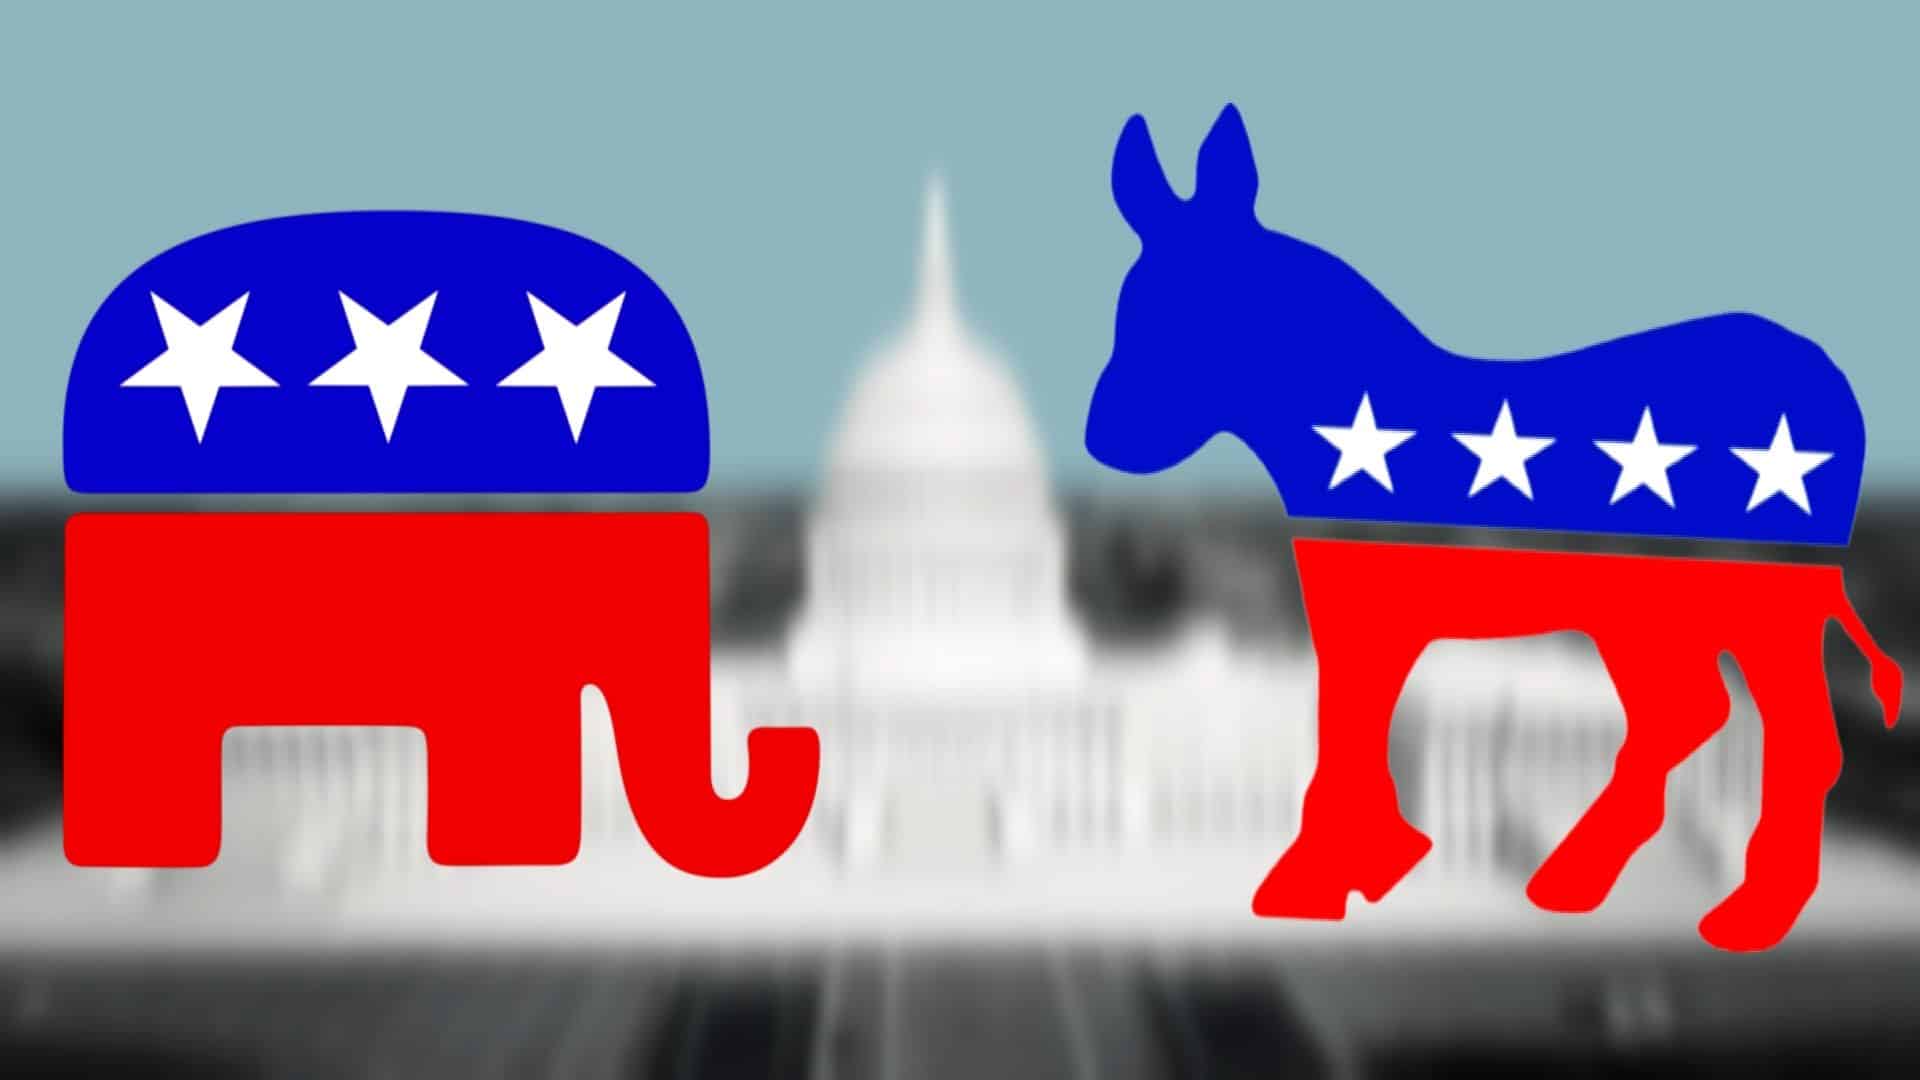 Democratas e republicanos - Características e diferenças entre os partidos